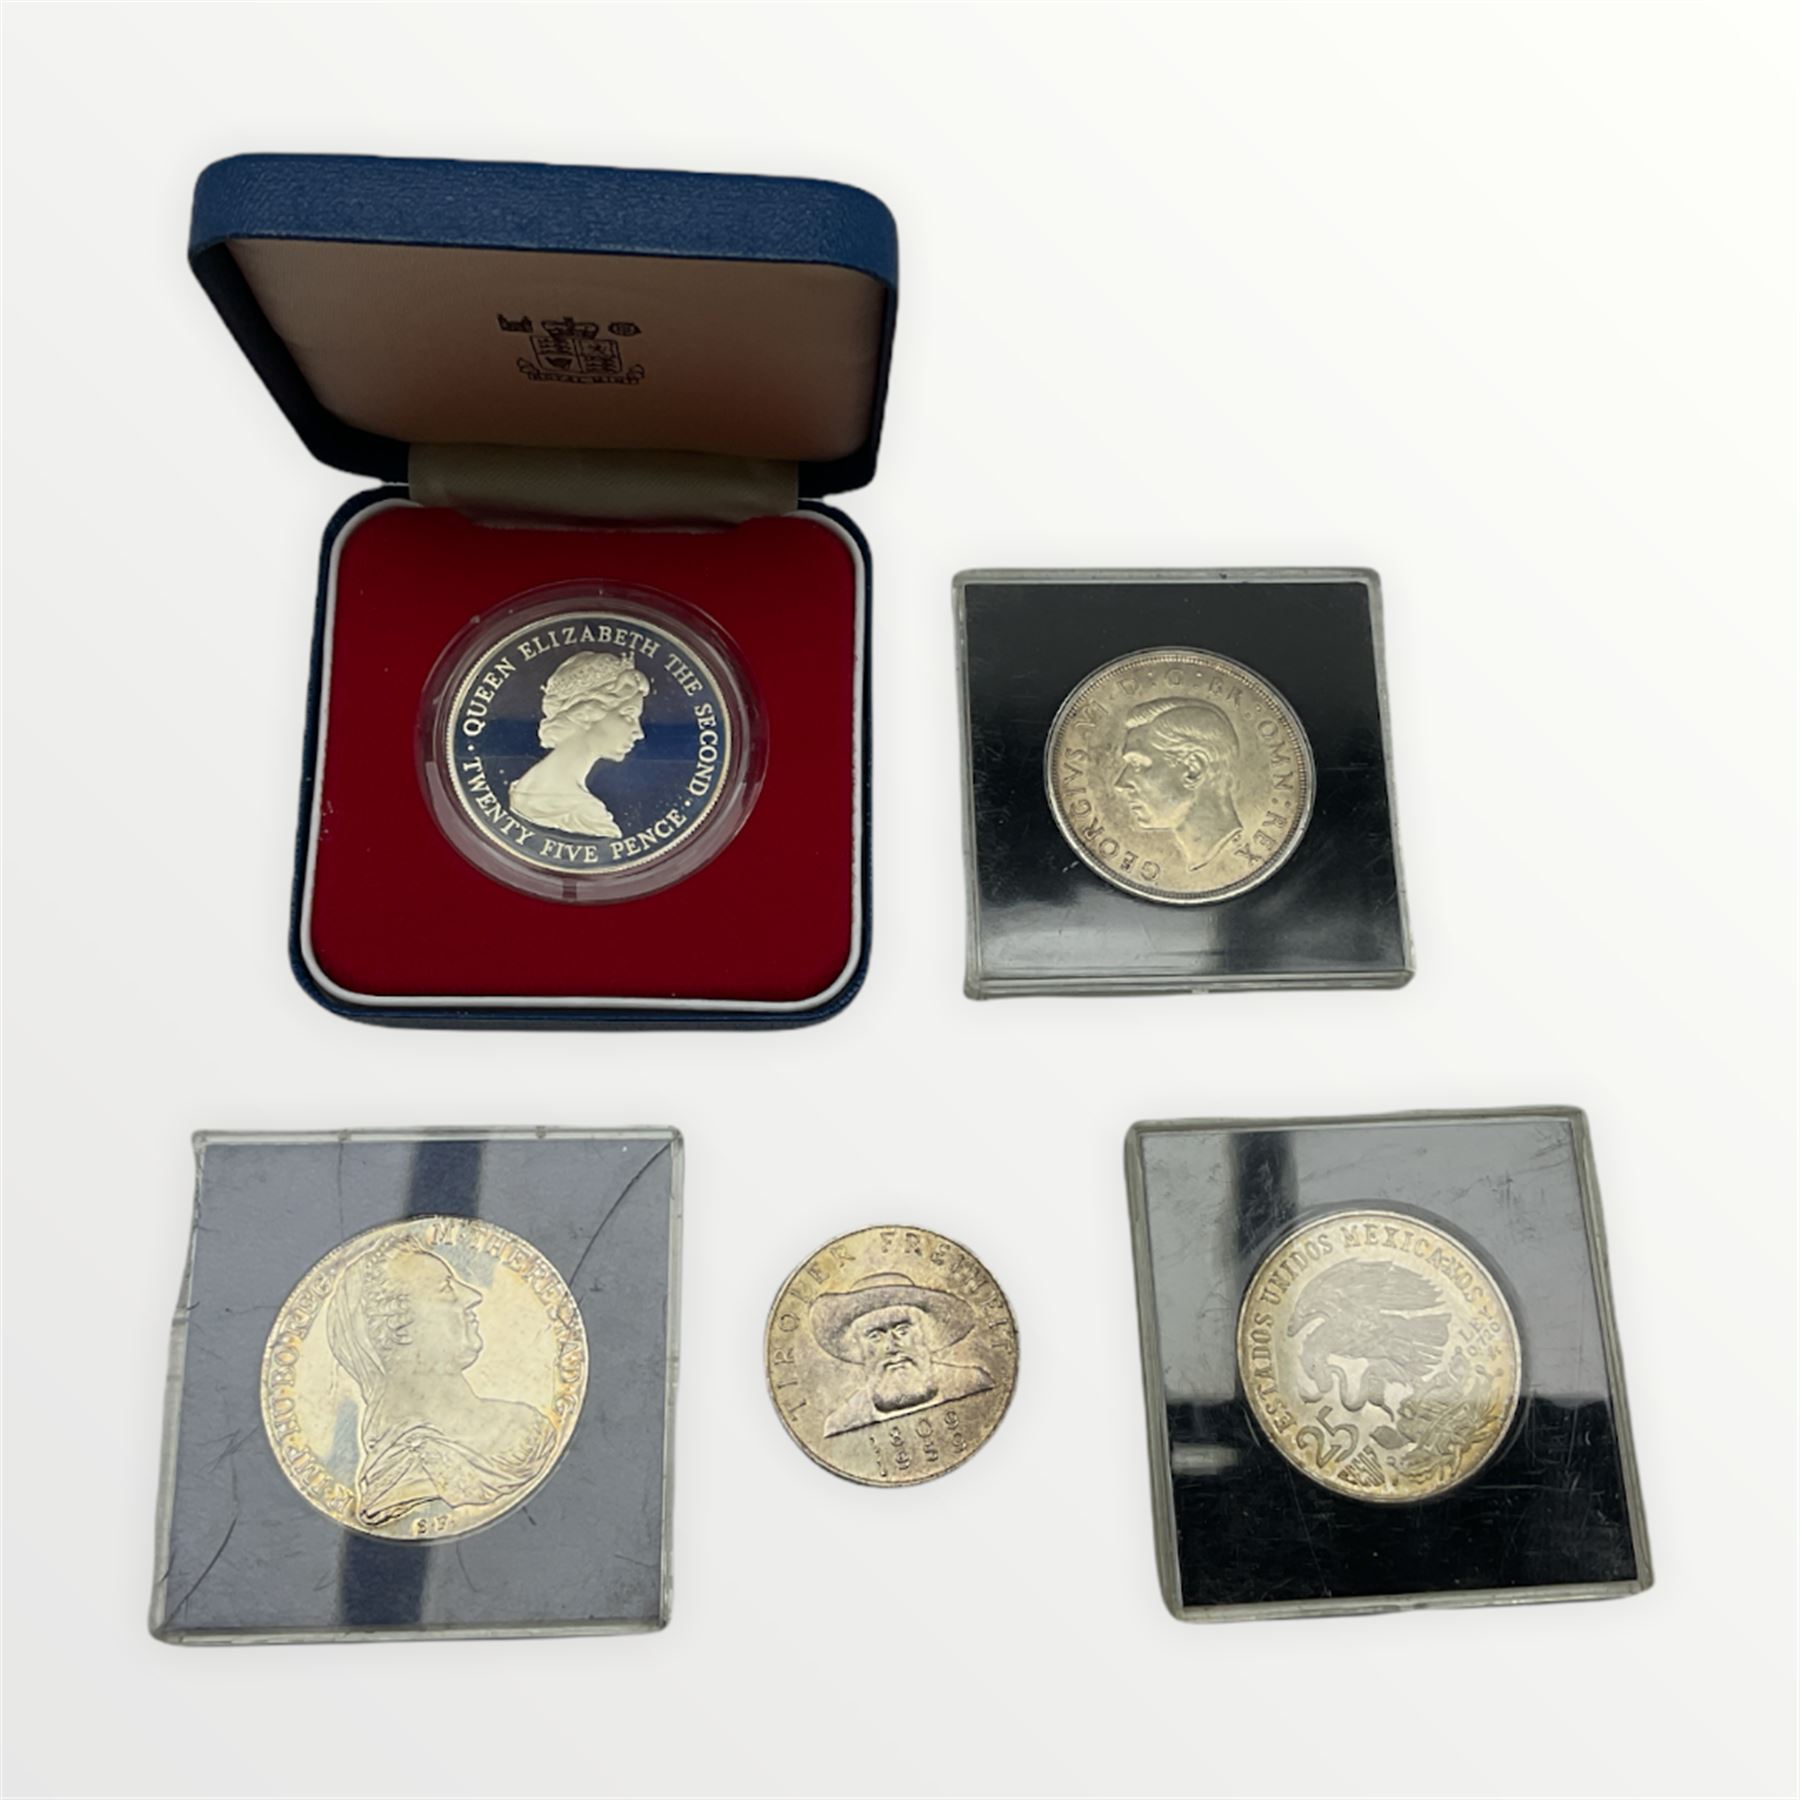 Queen Elizabeth II Bailiwick of Guernsey 1978 silver twenty five pence coin - Image 2 of 2